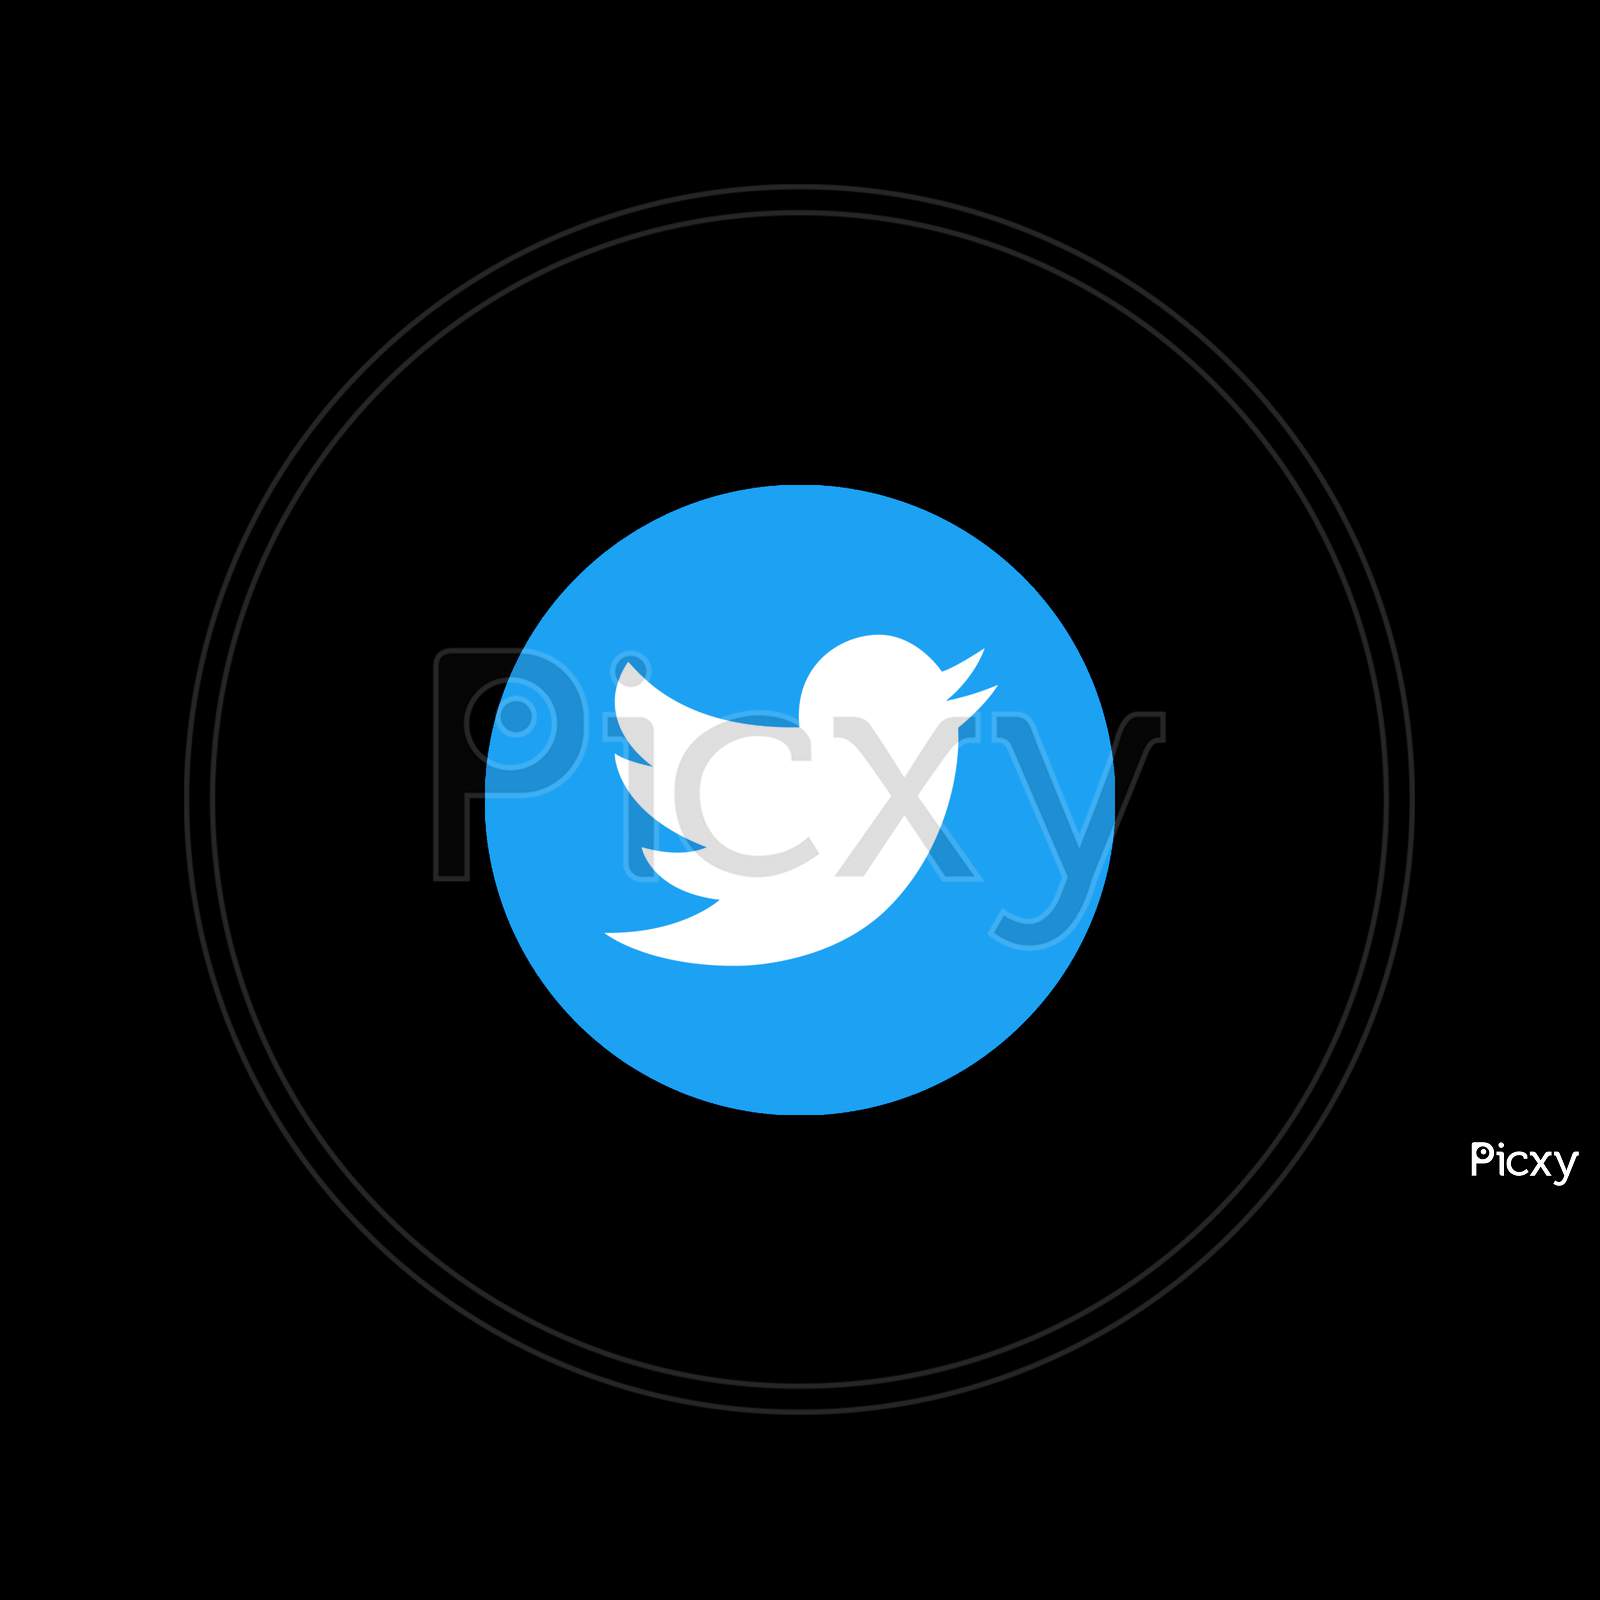 twitter and facebook logo black background